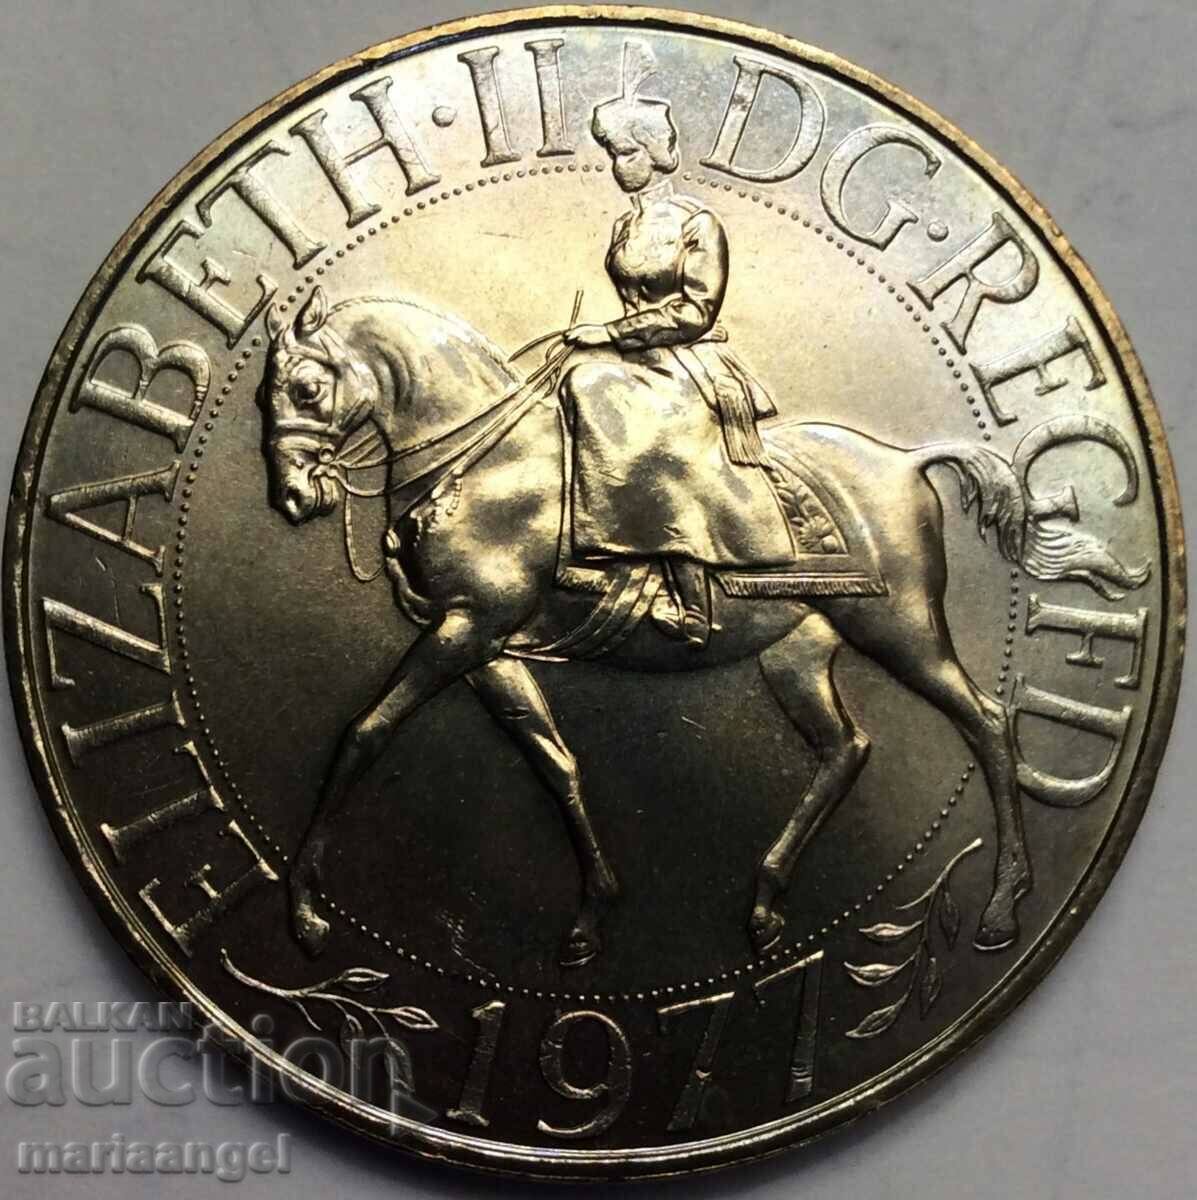 Marea Britanie 1977 25 New Pence Jubilee Medal 38mm